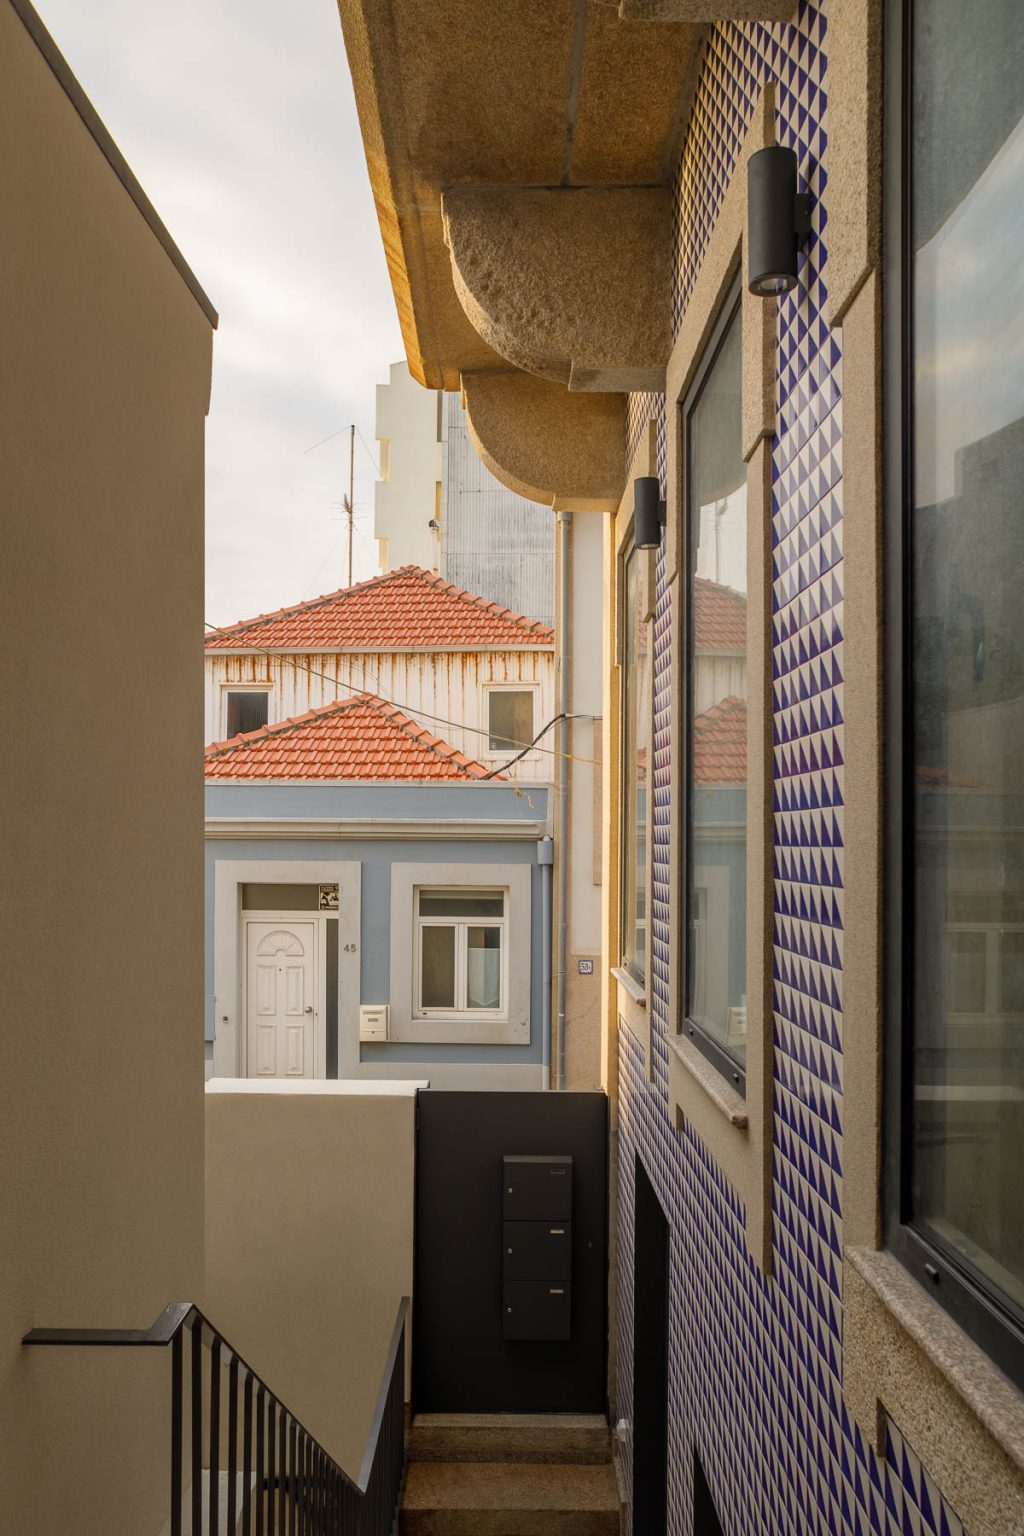 Prédio Foz in Porto - As Arquitecto